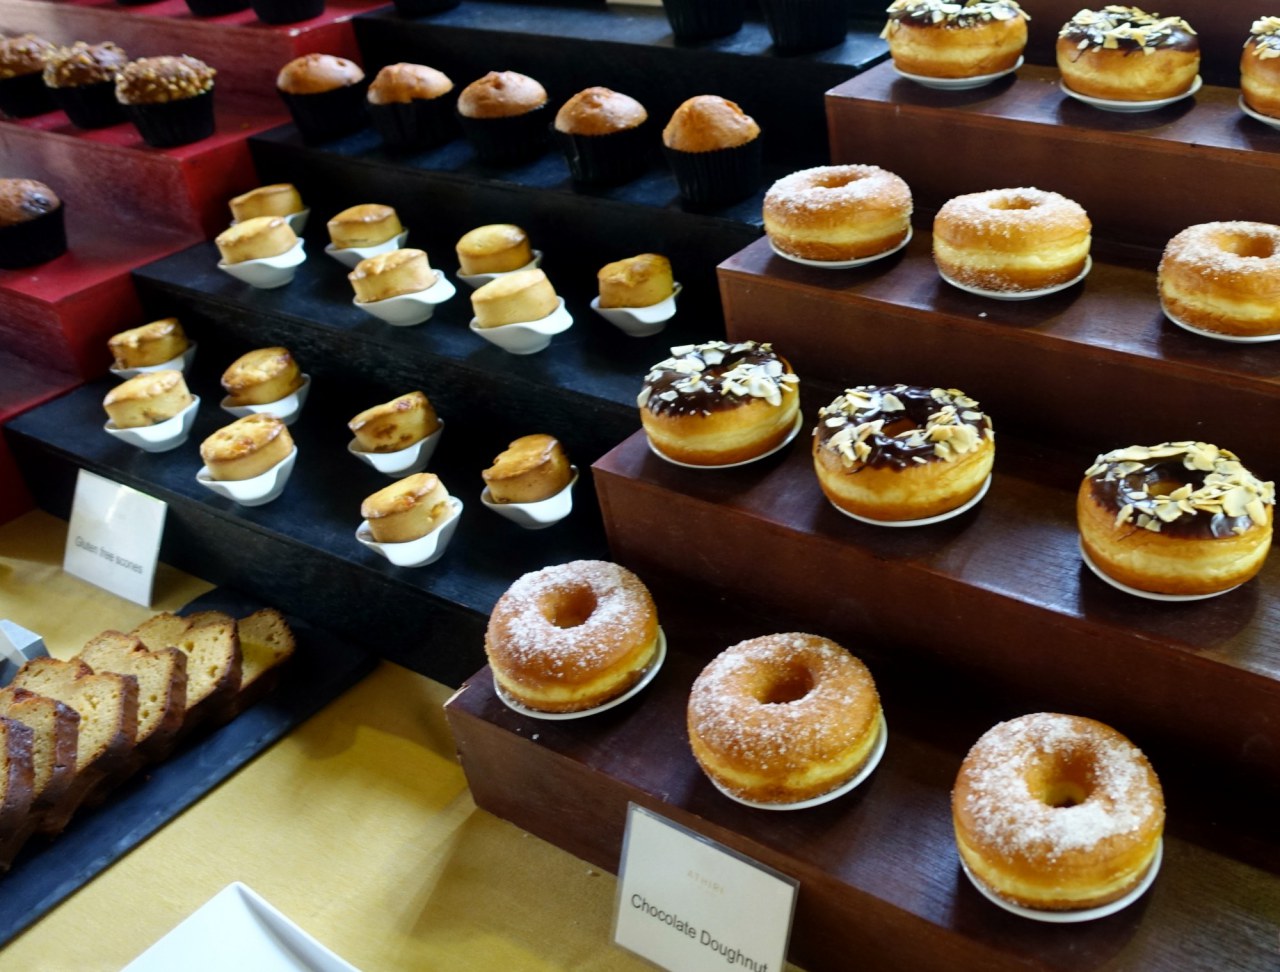 Velaa Breakfast Buffet: Doughnuts and Pastries